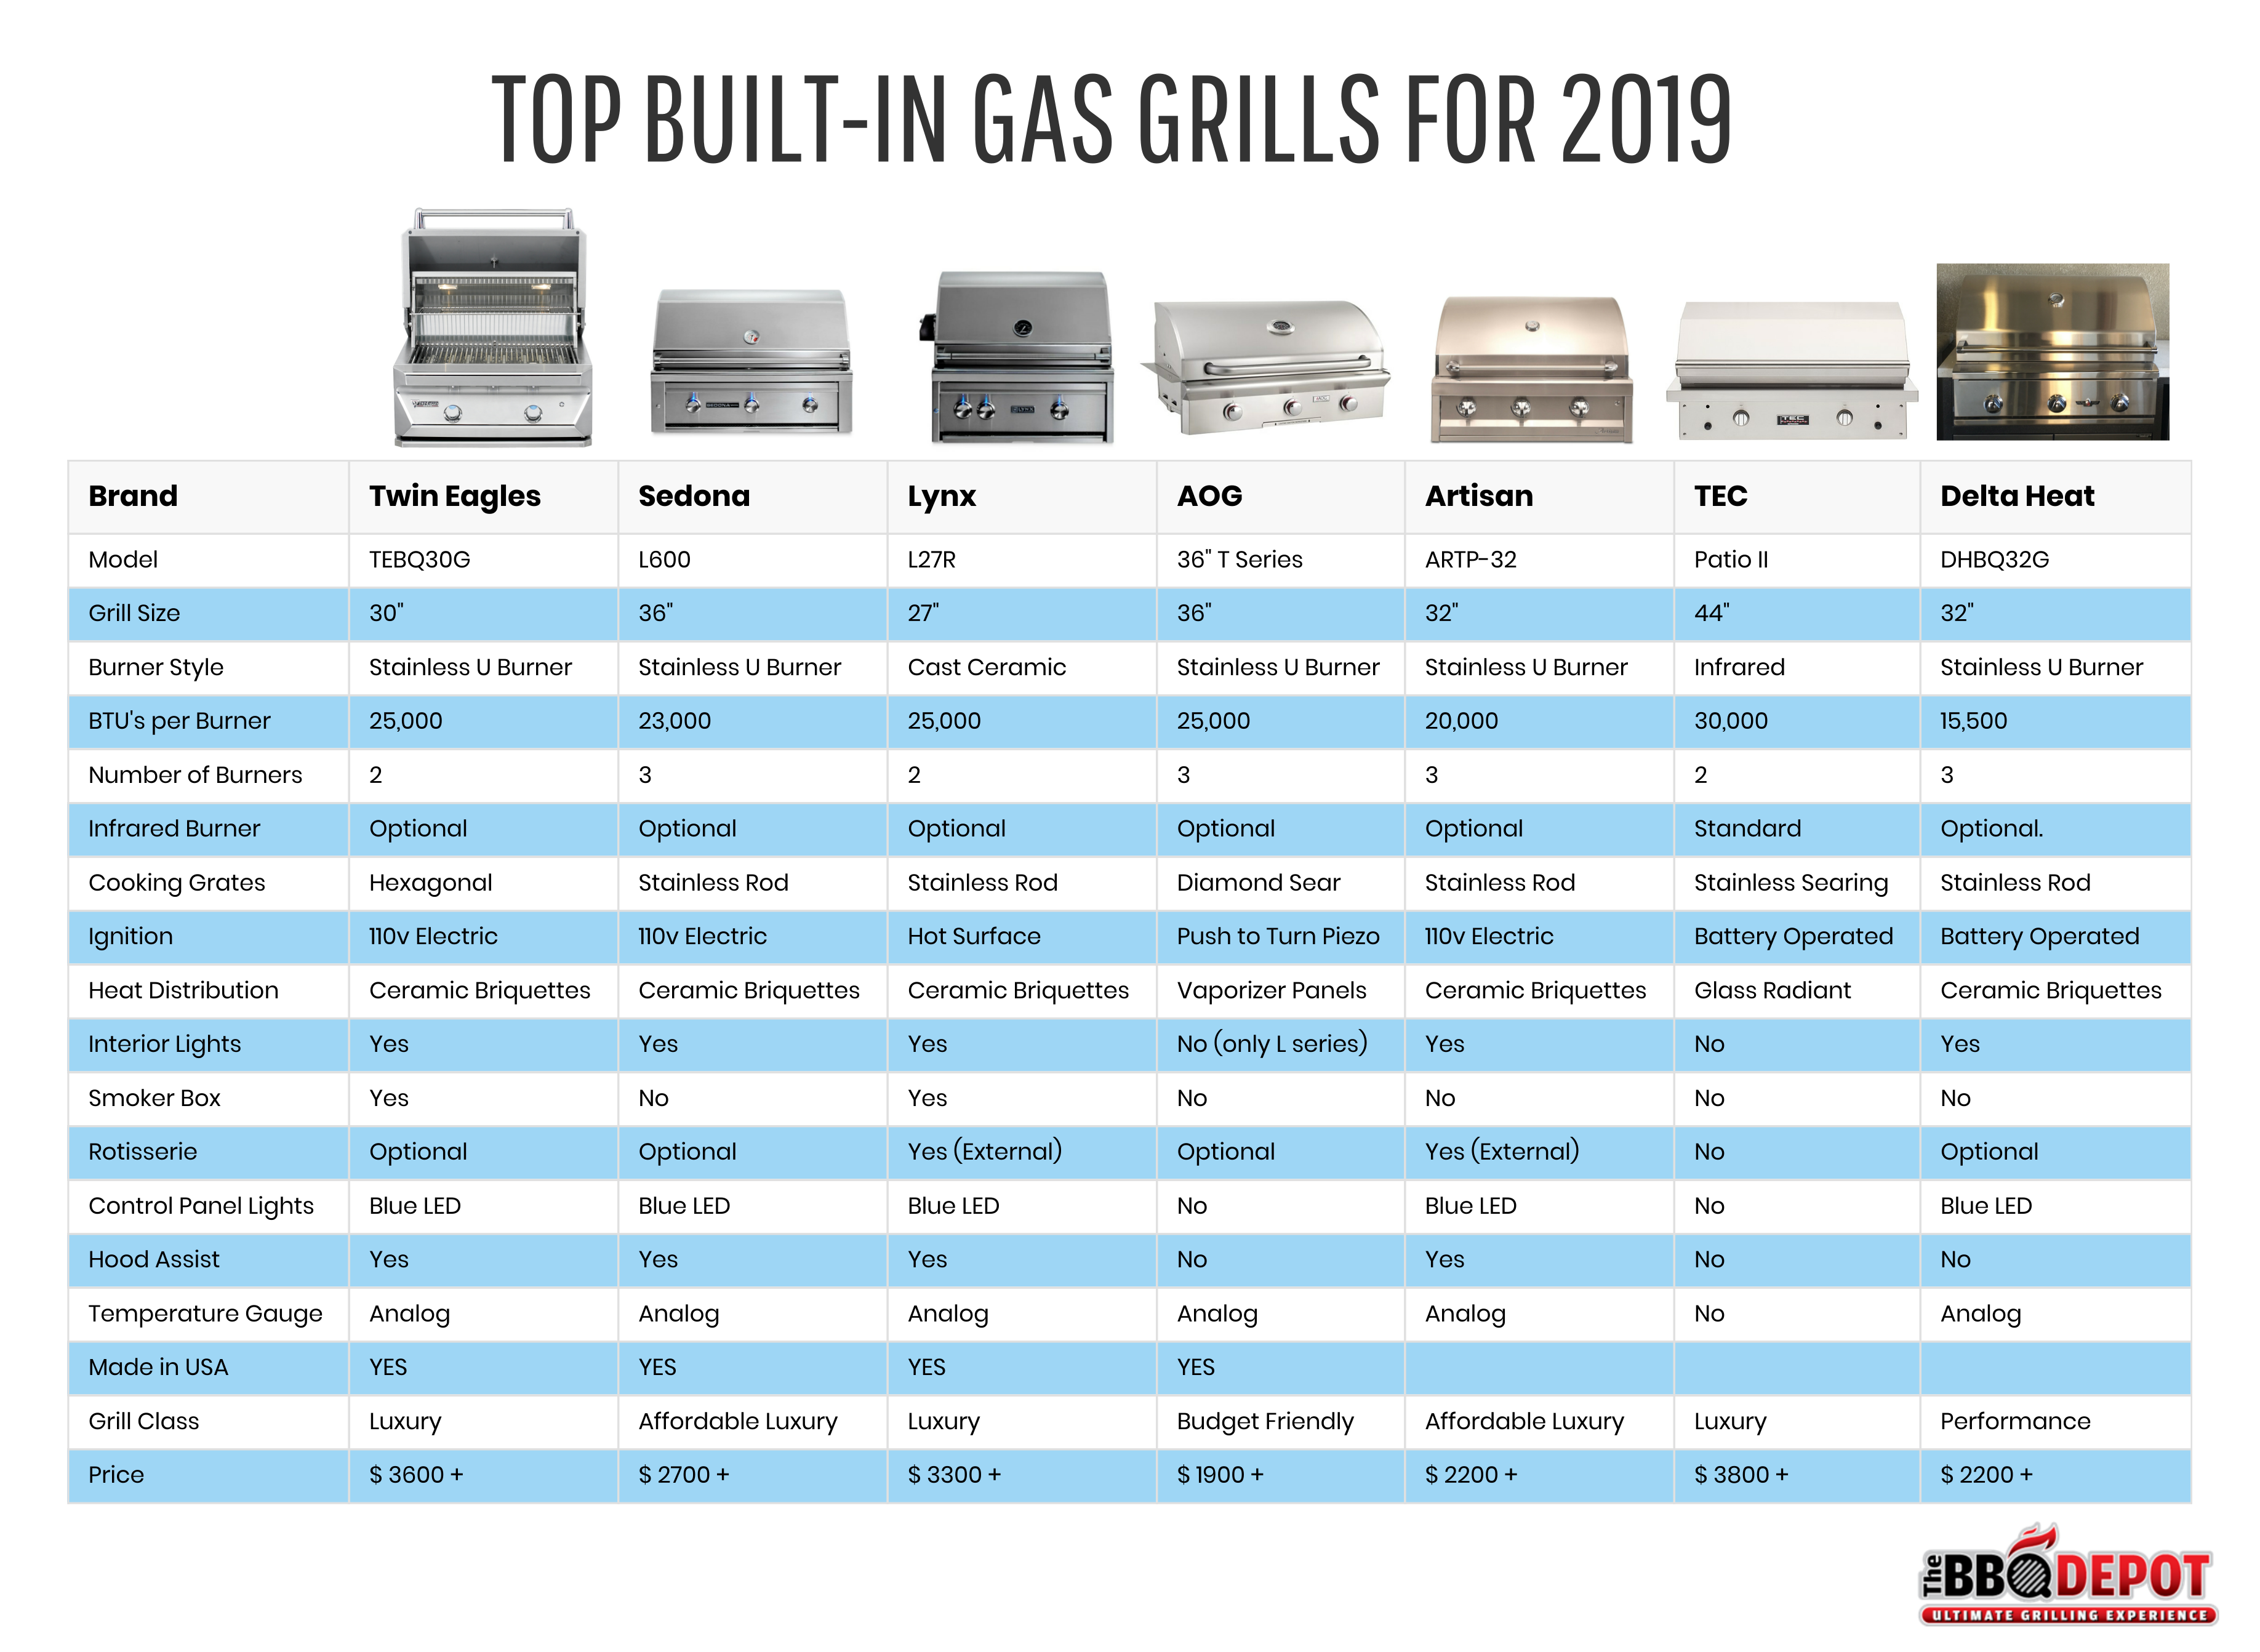 Top Built-in Gas Grills of 2019